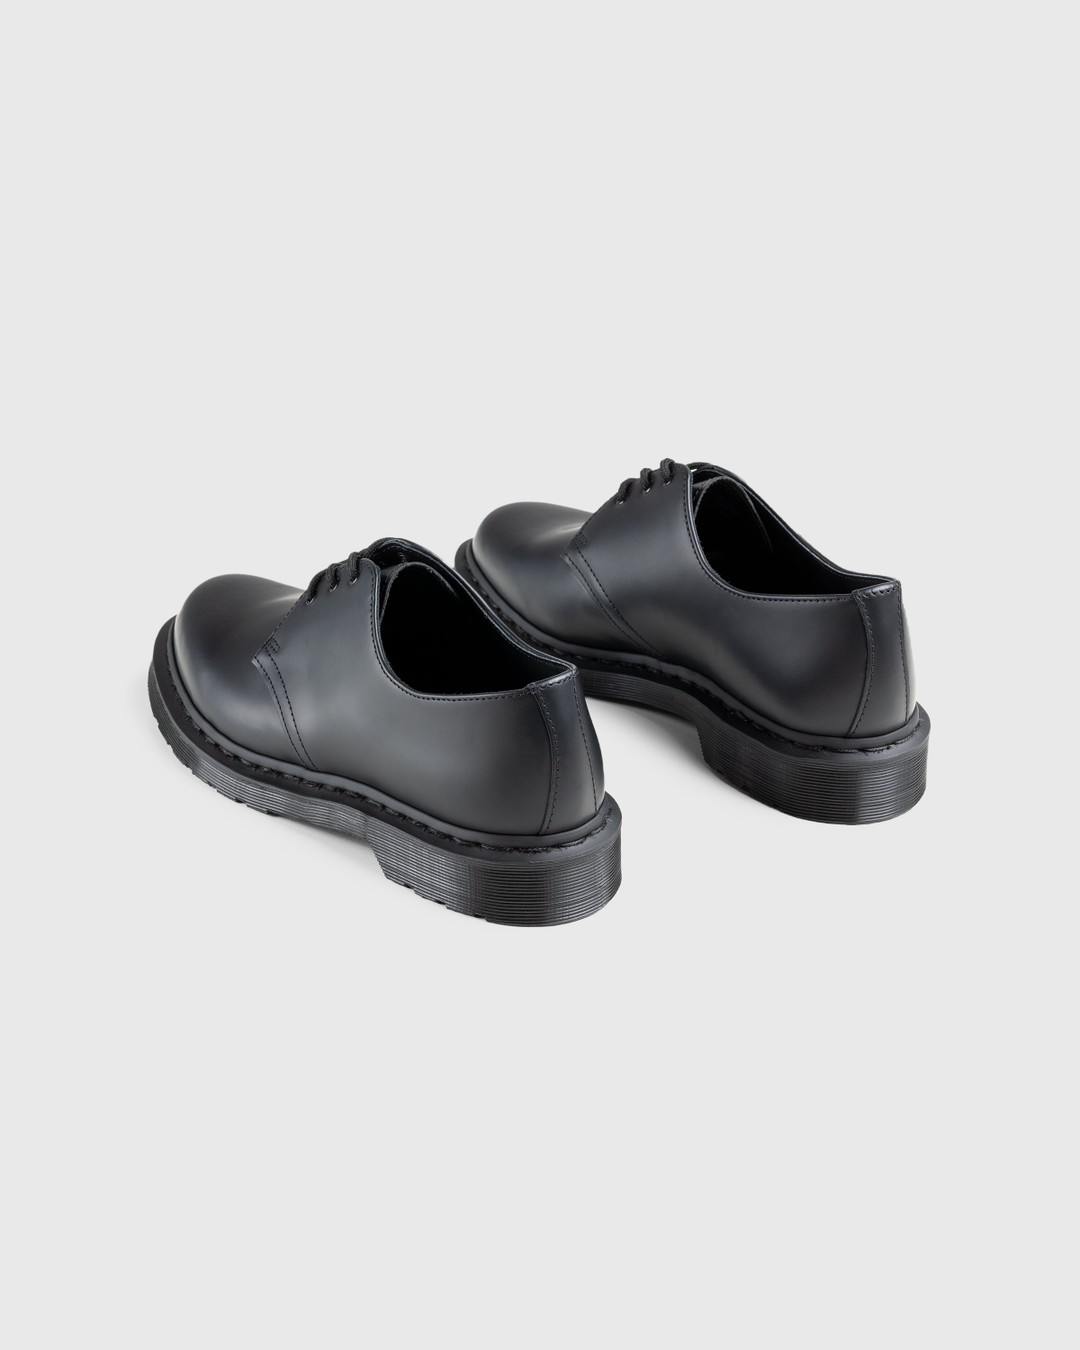 Dr. Martens – 1461 Mono Black Smooth - Shoes - Black - Image 4